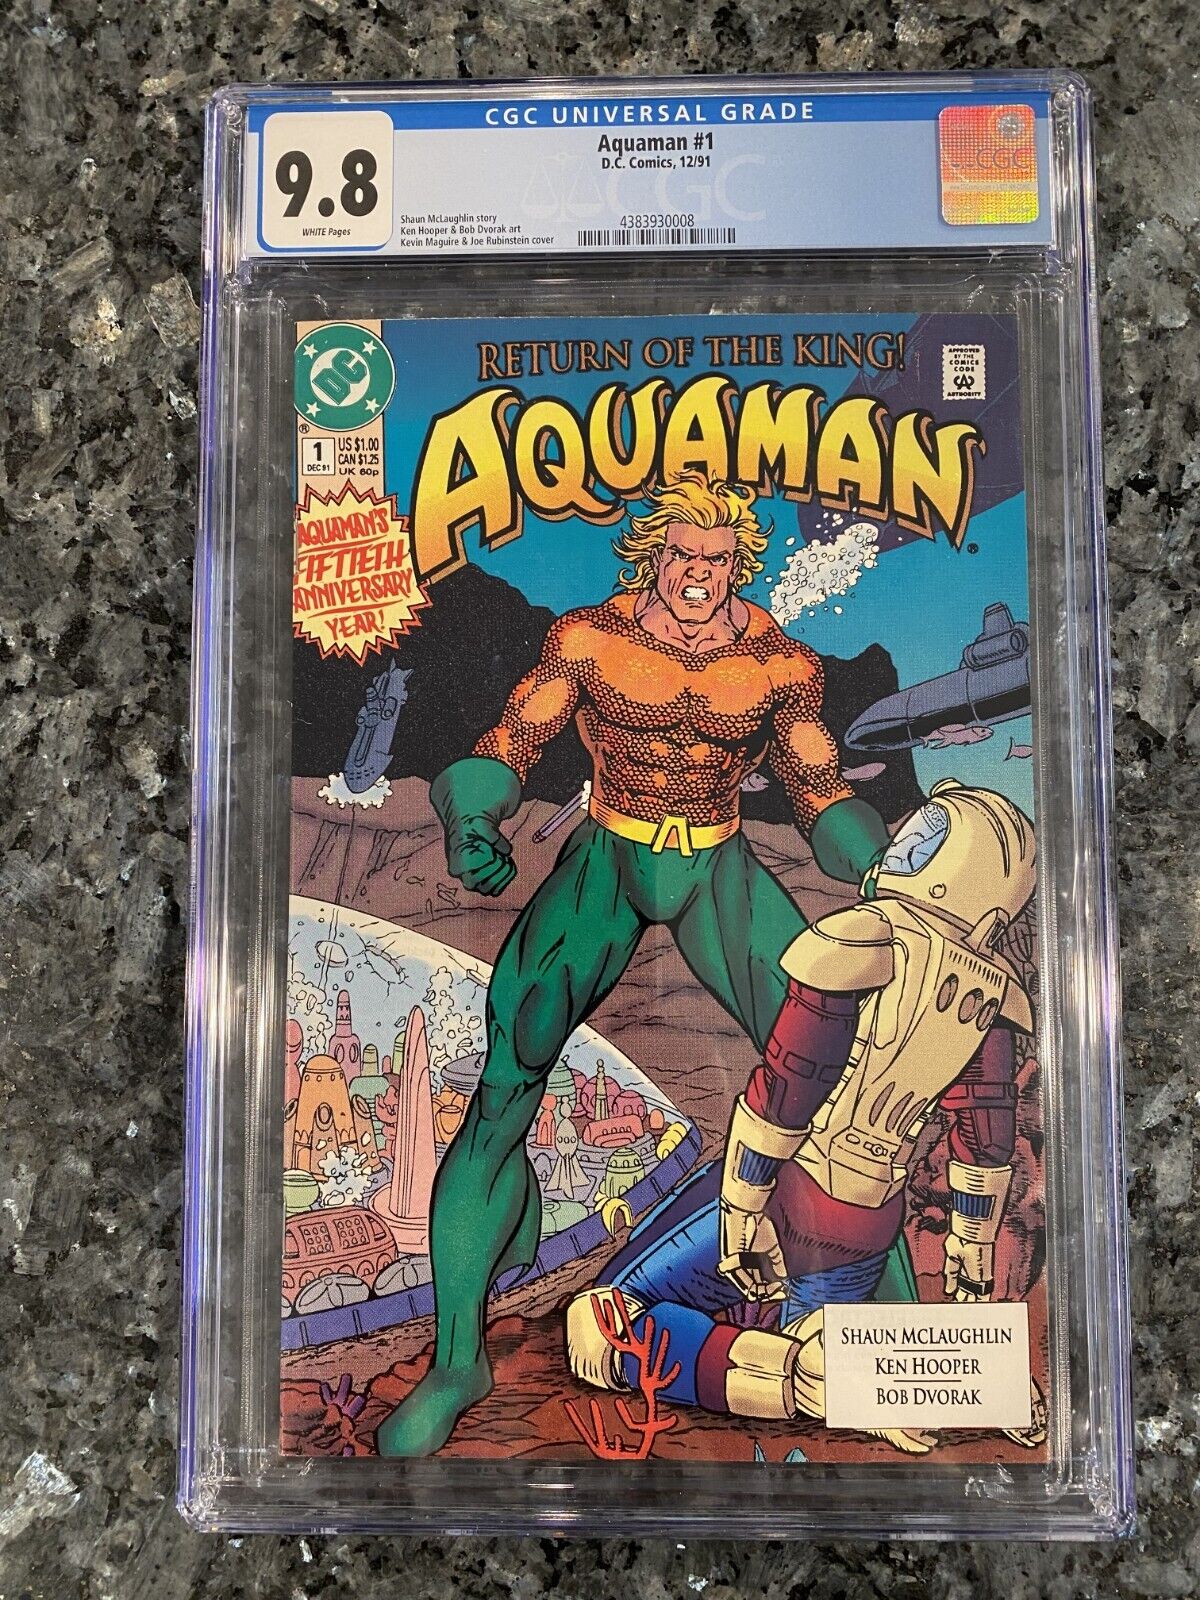 CGC 9.8 Aquaman #1, Vol. 4 DC Comics - Dec 1991 Premiere Issue with White Pages